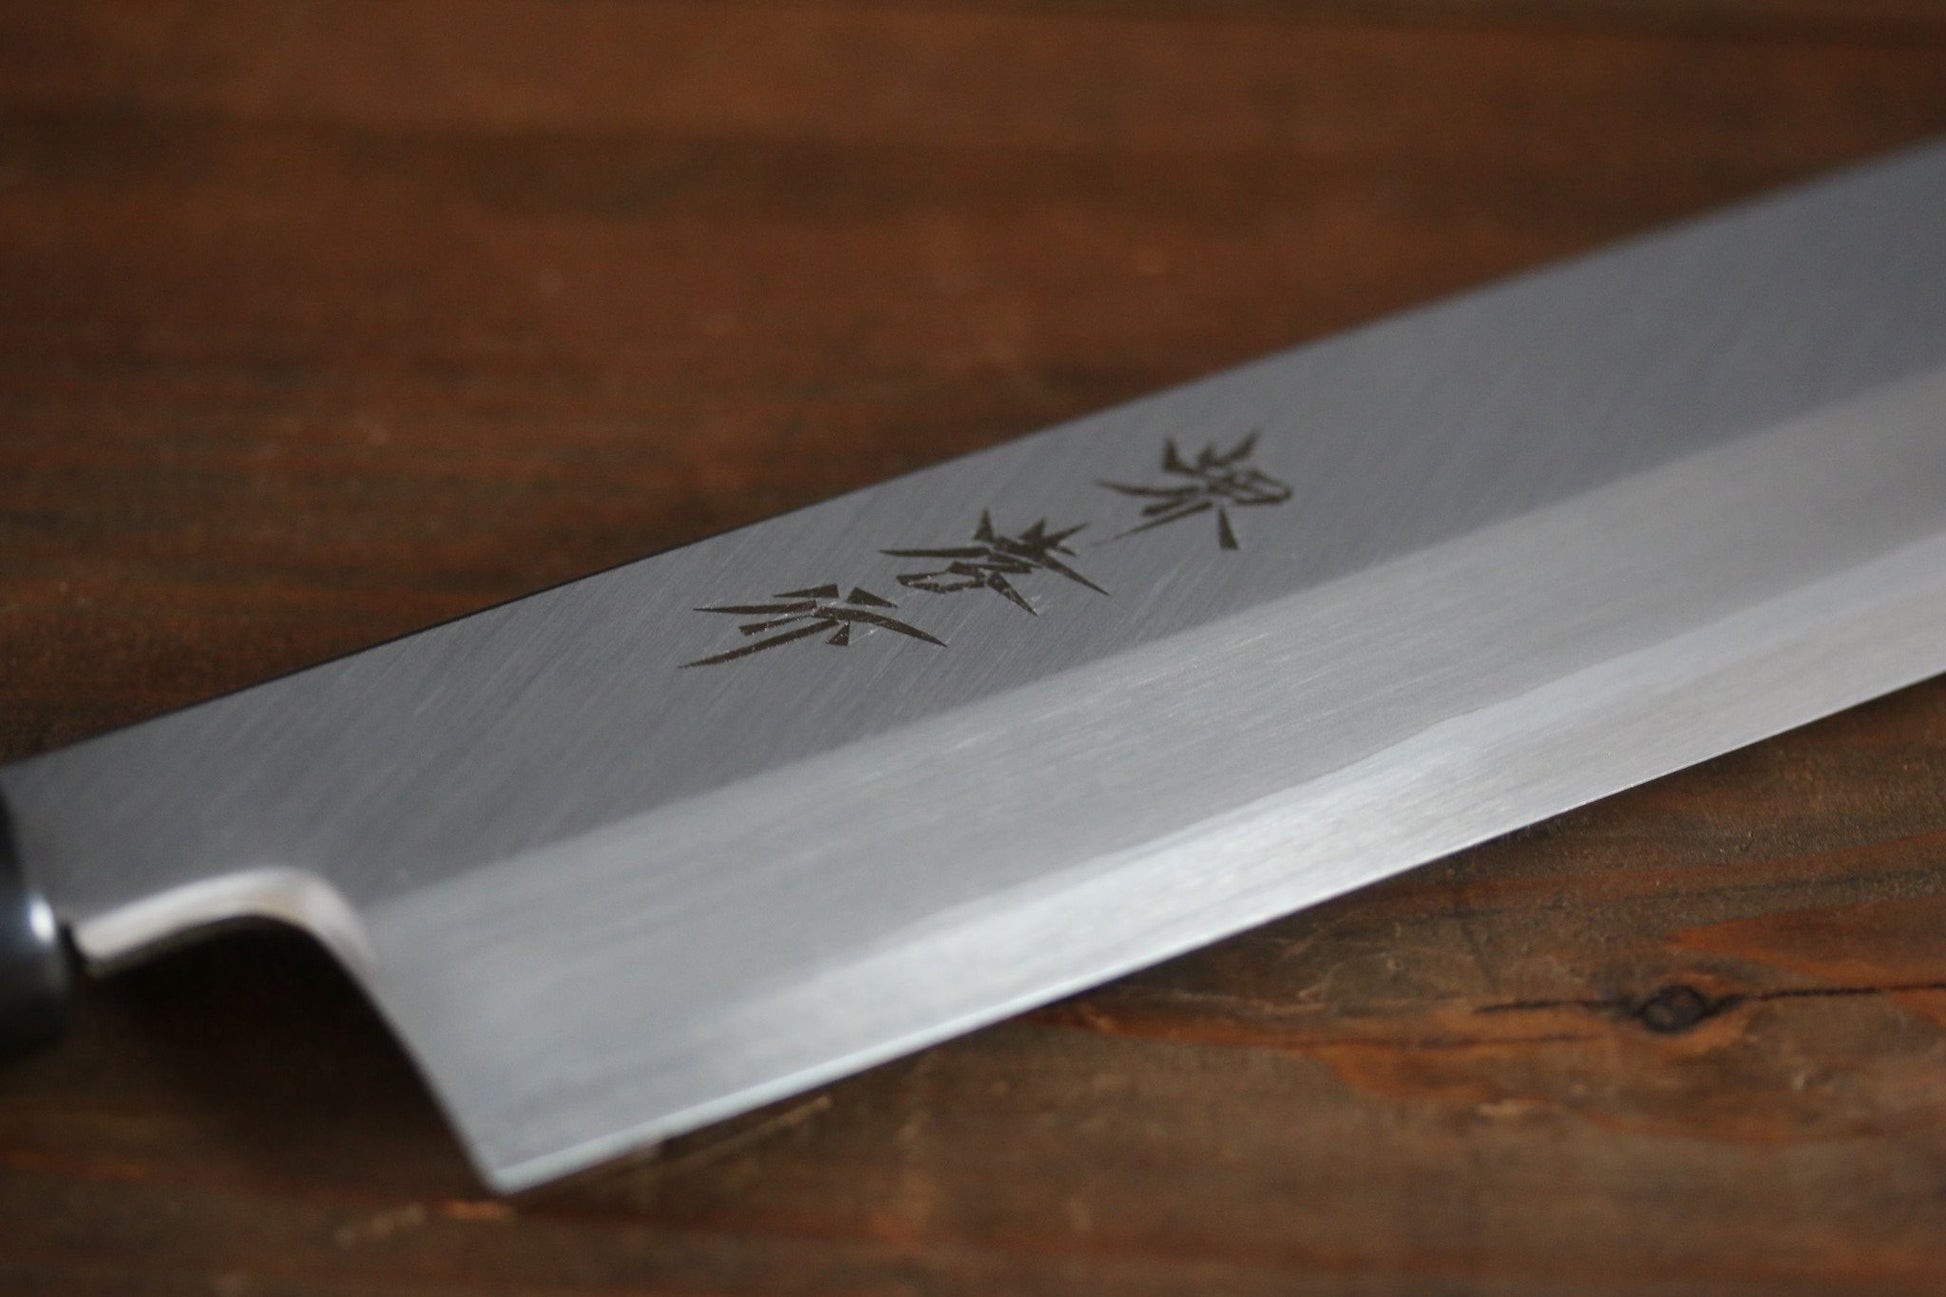 Sakai Takayuki INOX Molybdenum steel Usuba Knife-210mm - Japanny - Best Japanese Knife